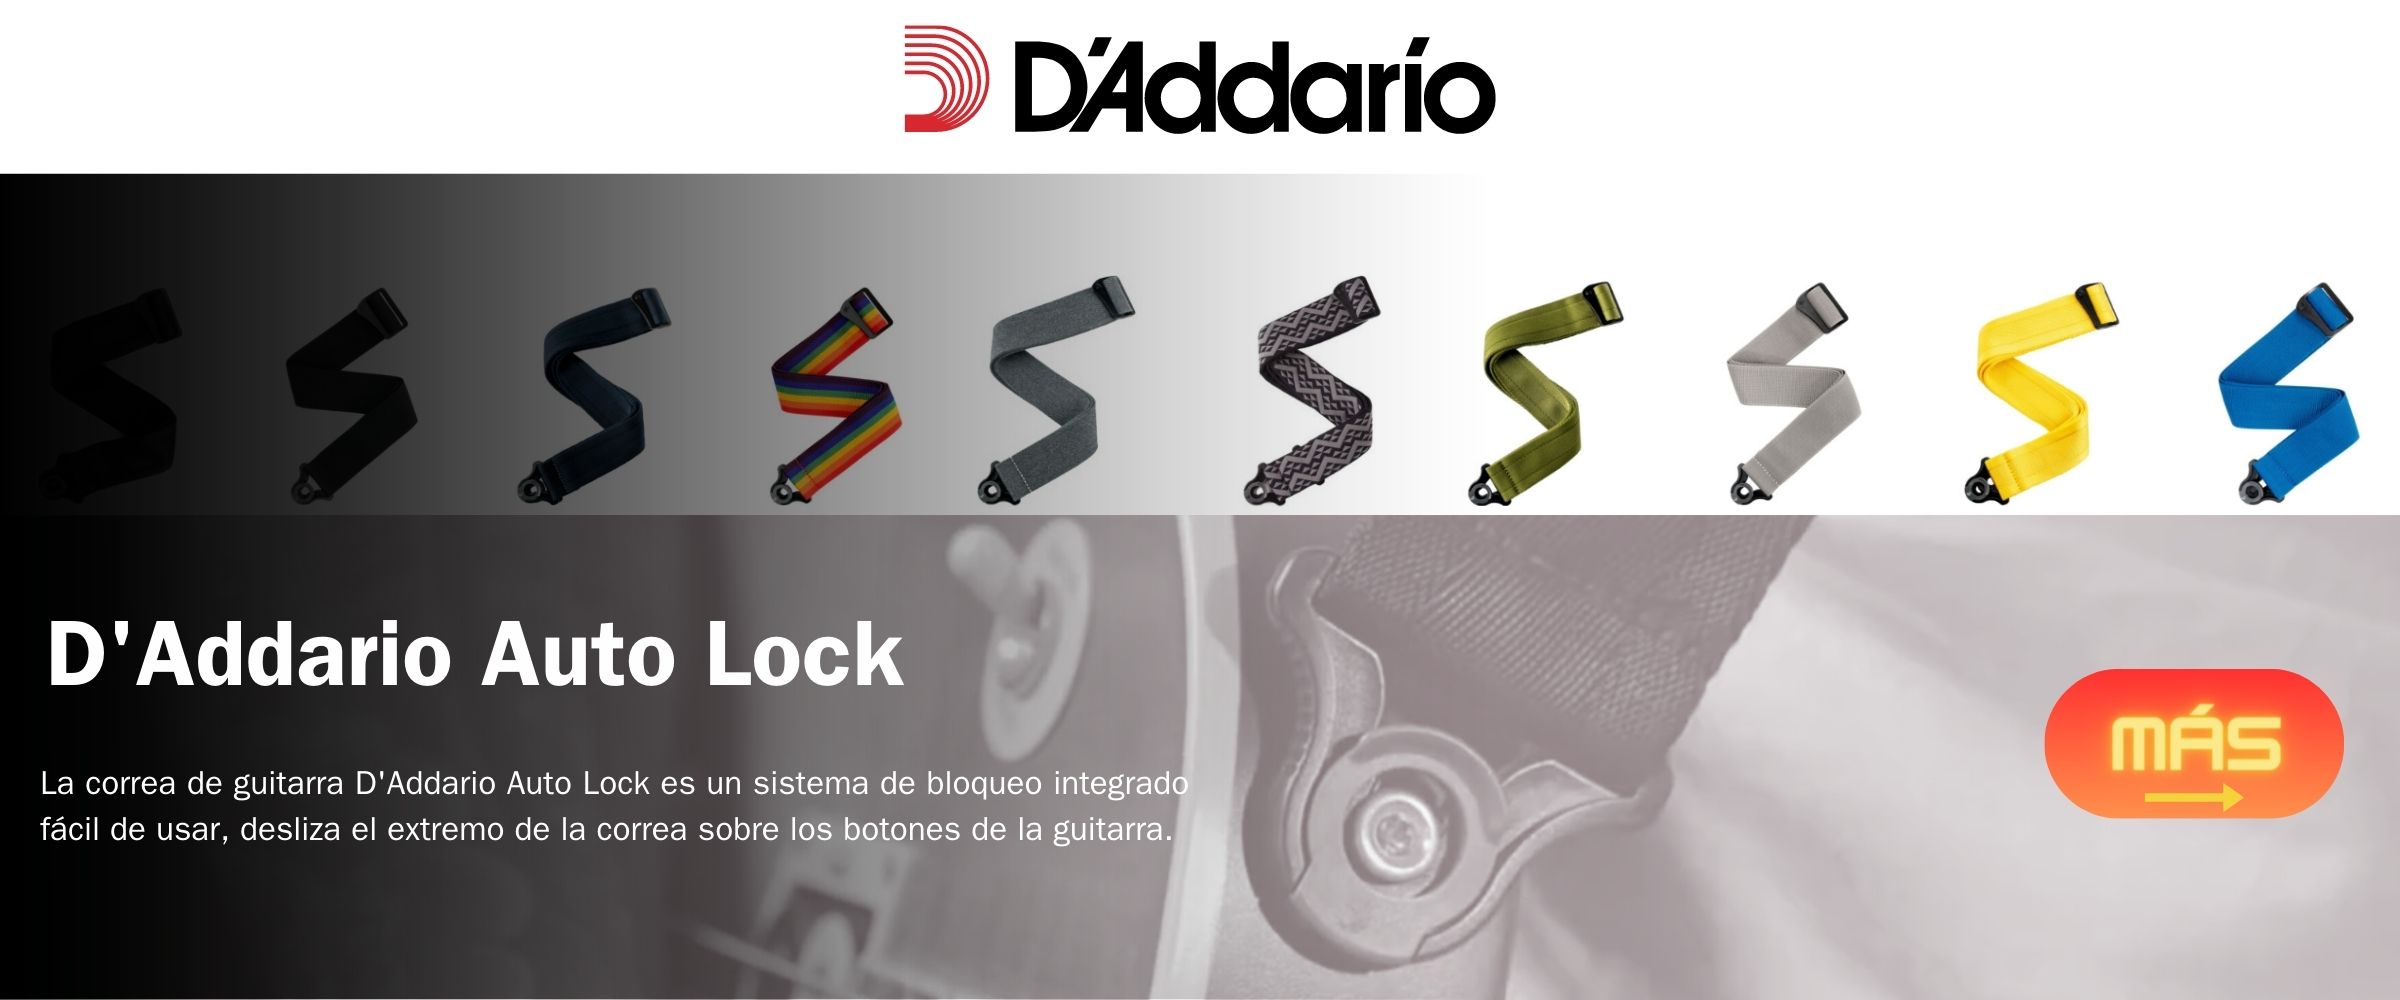 D'Addario Auto Lock